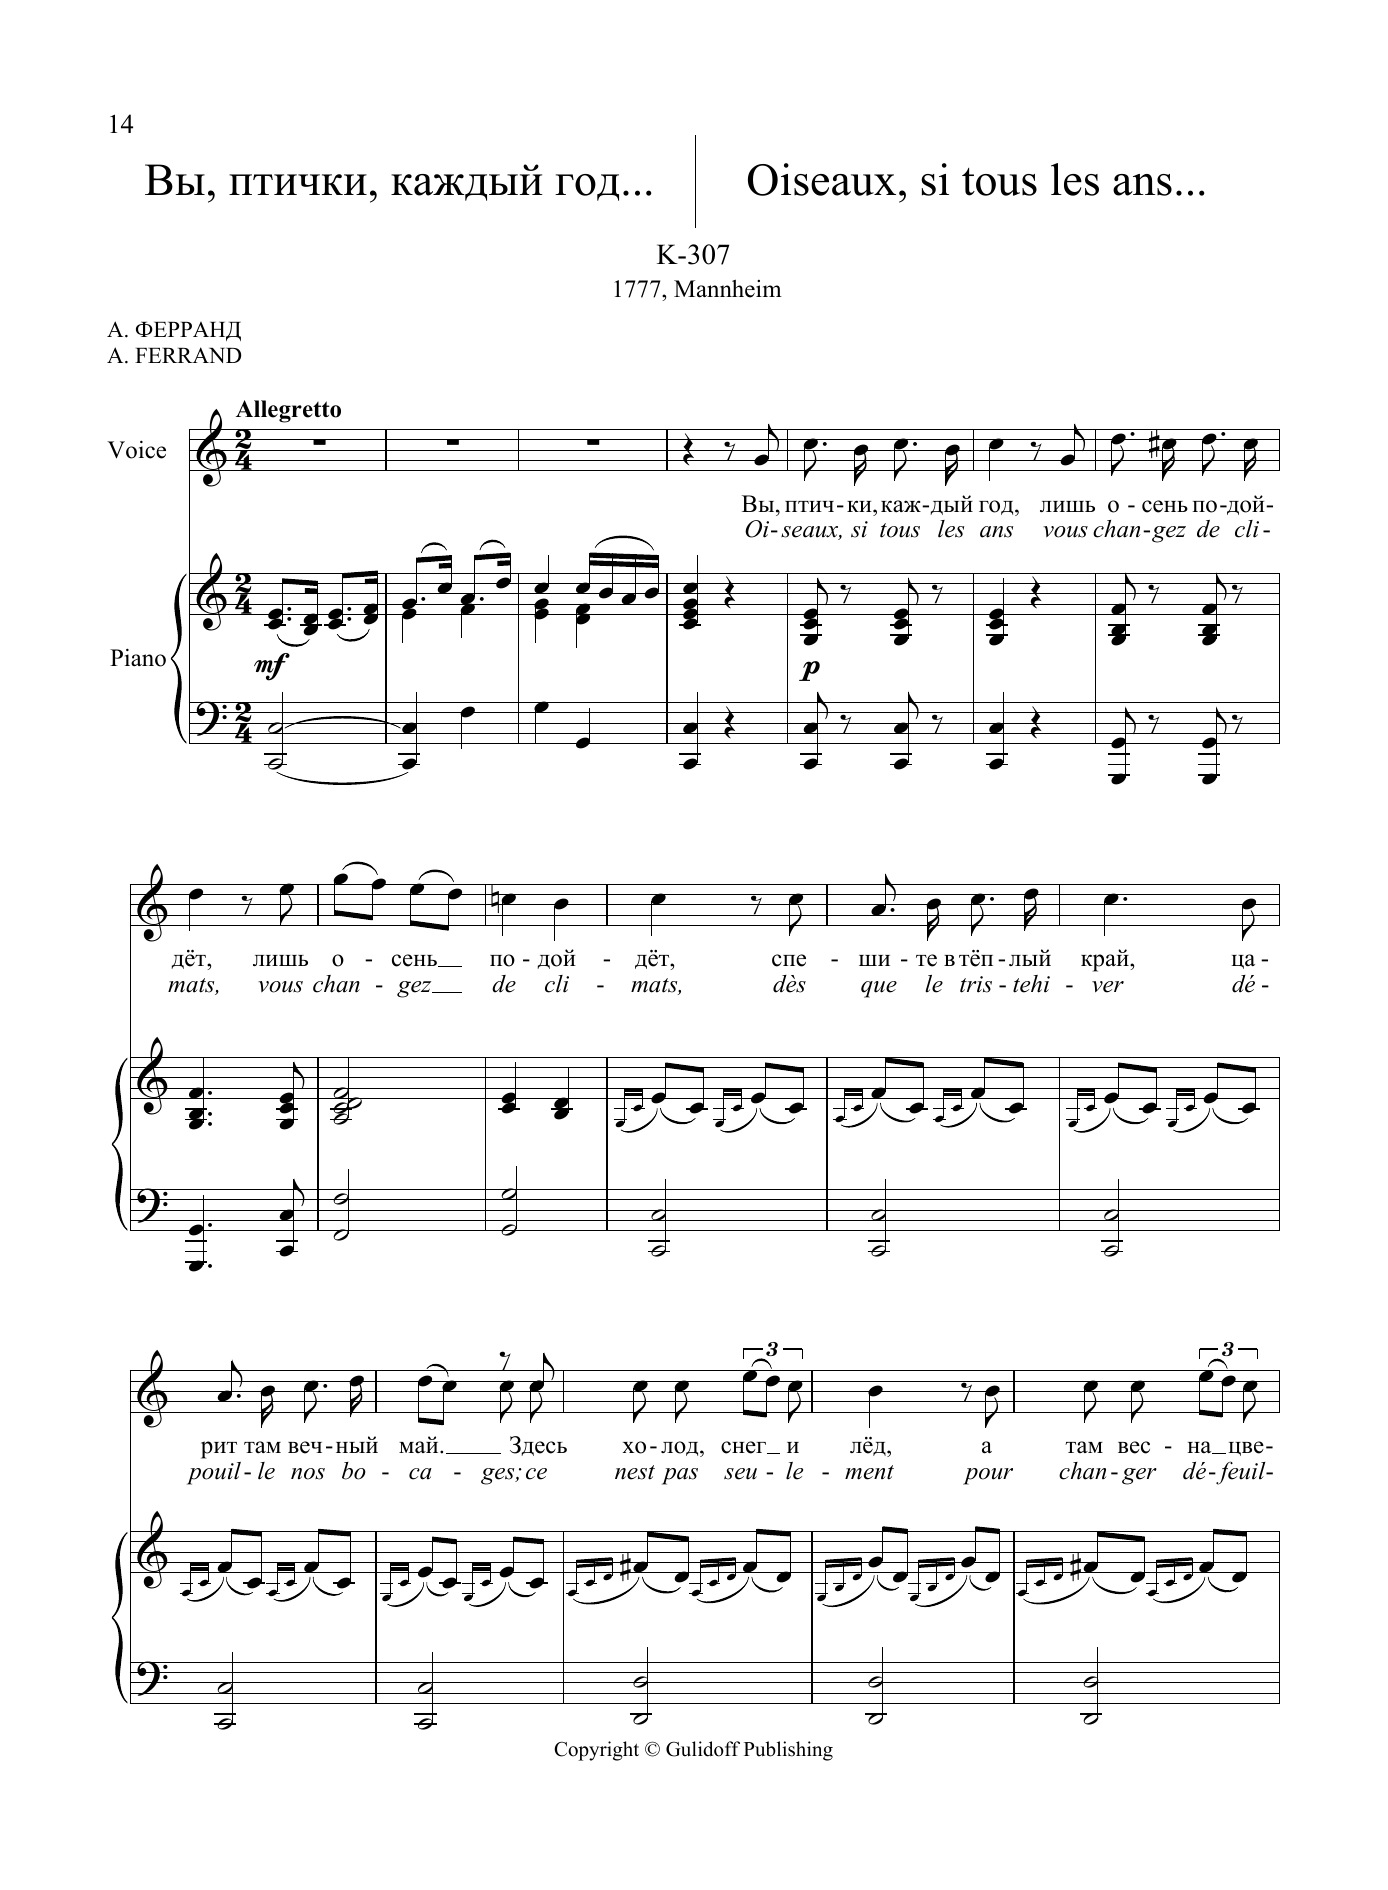 Download Wolfgang Amadeus Mozart 36 Songs Vol. 1: Oiseaux, si tous les a Sheet Music